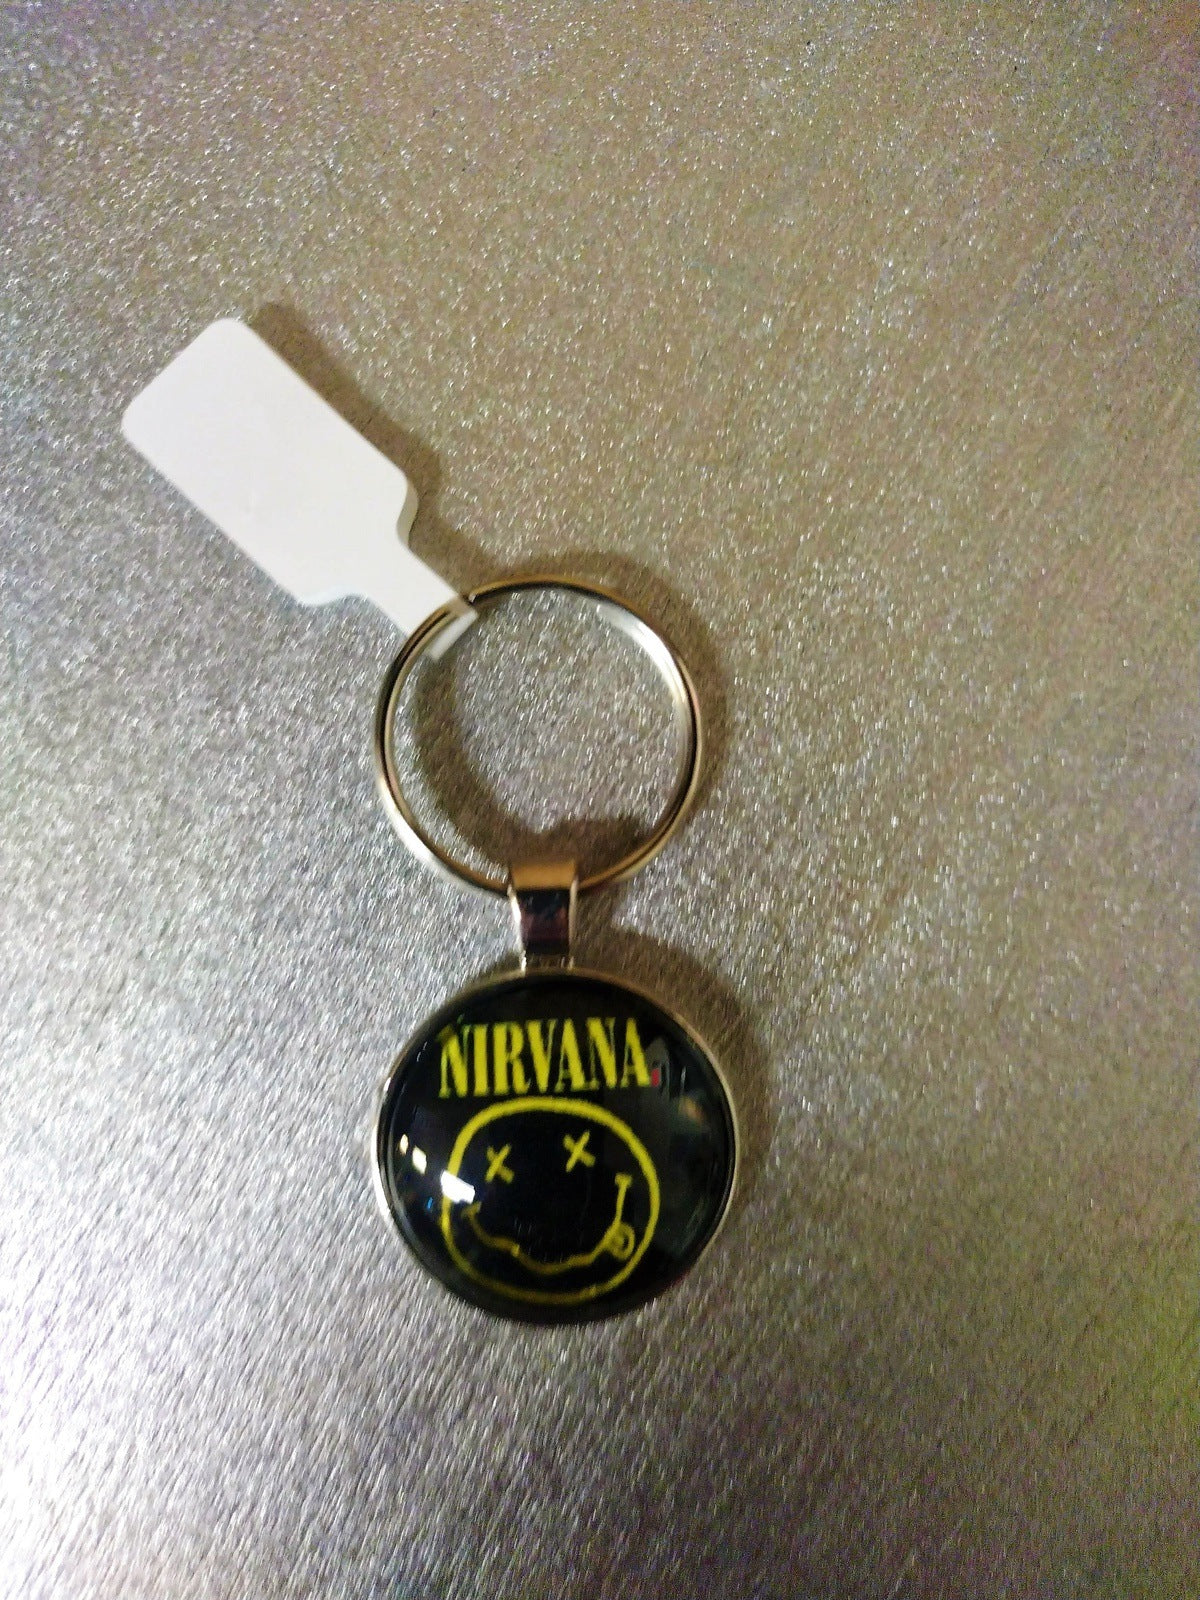 Nirvana 1 Inch Keychain